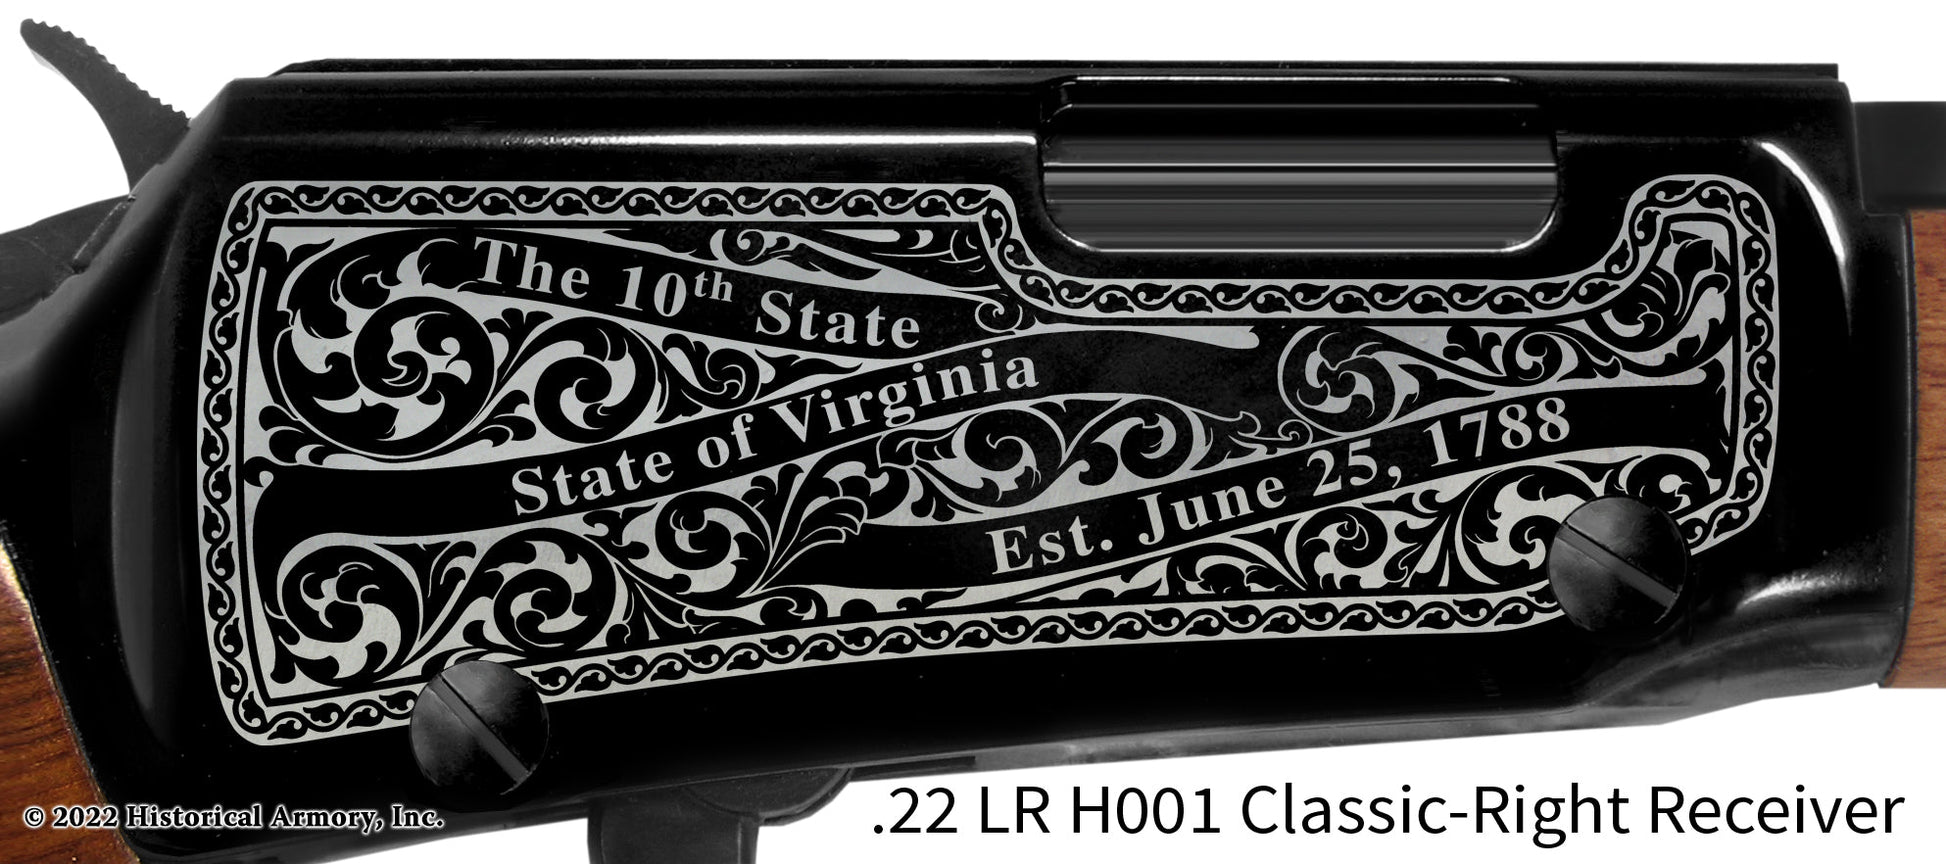 Scott County Virginia Engraved Henry H001 Rifle